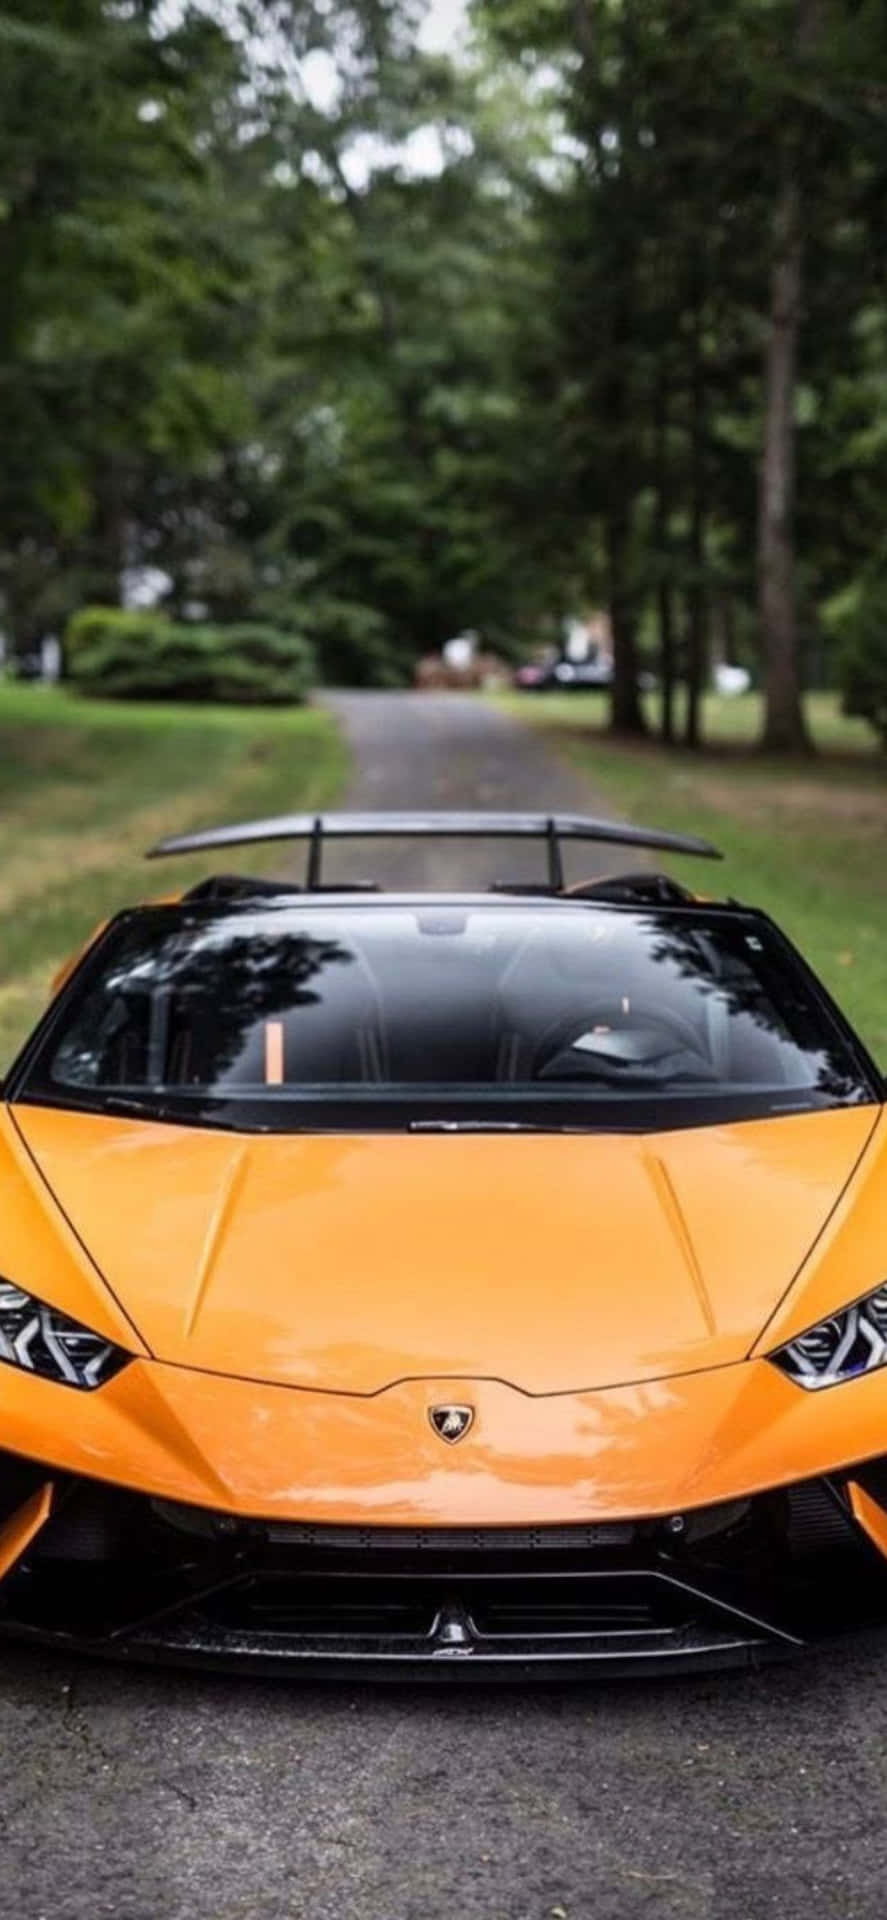 iPhone XS Max Lamborghini Black And Orange Background